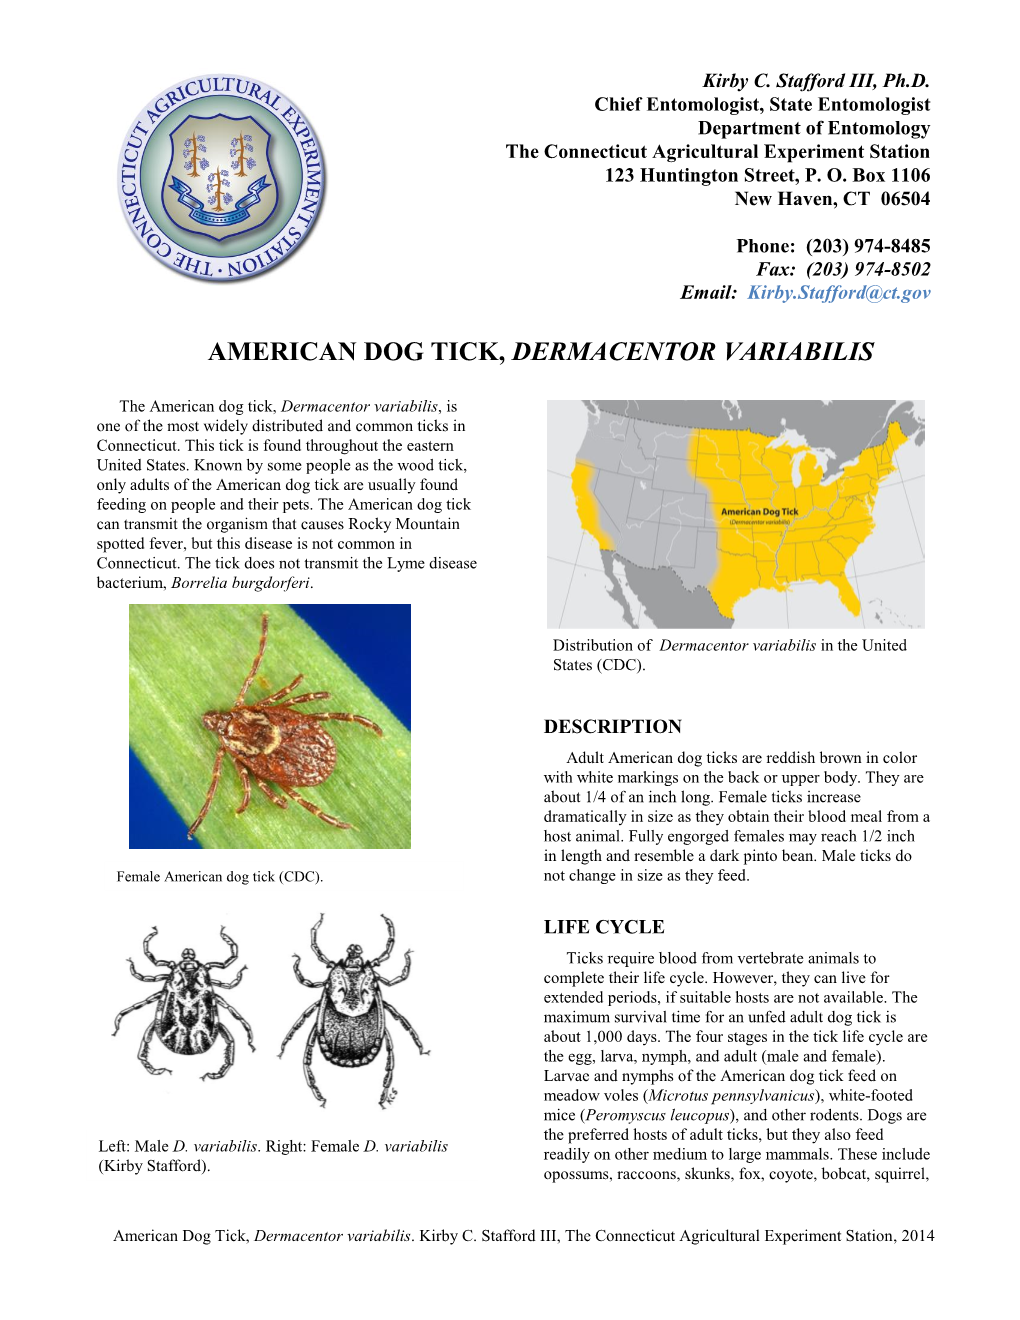 American Dog Tick, Dermacentor Variabilis